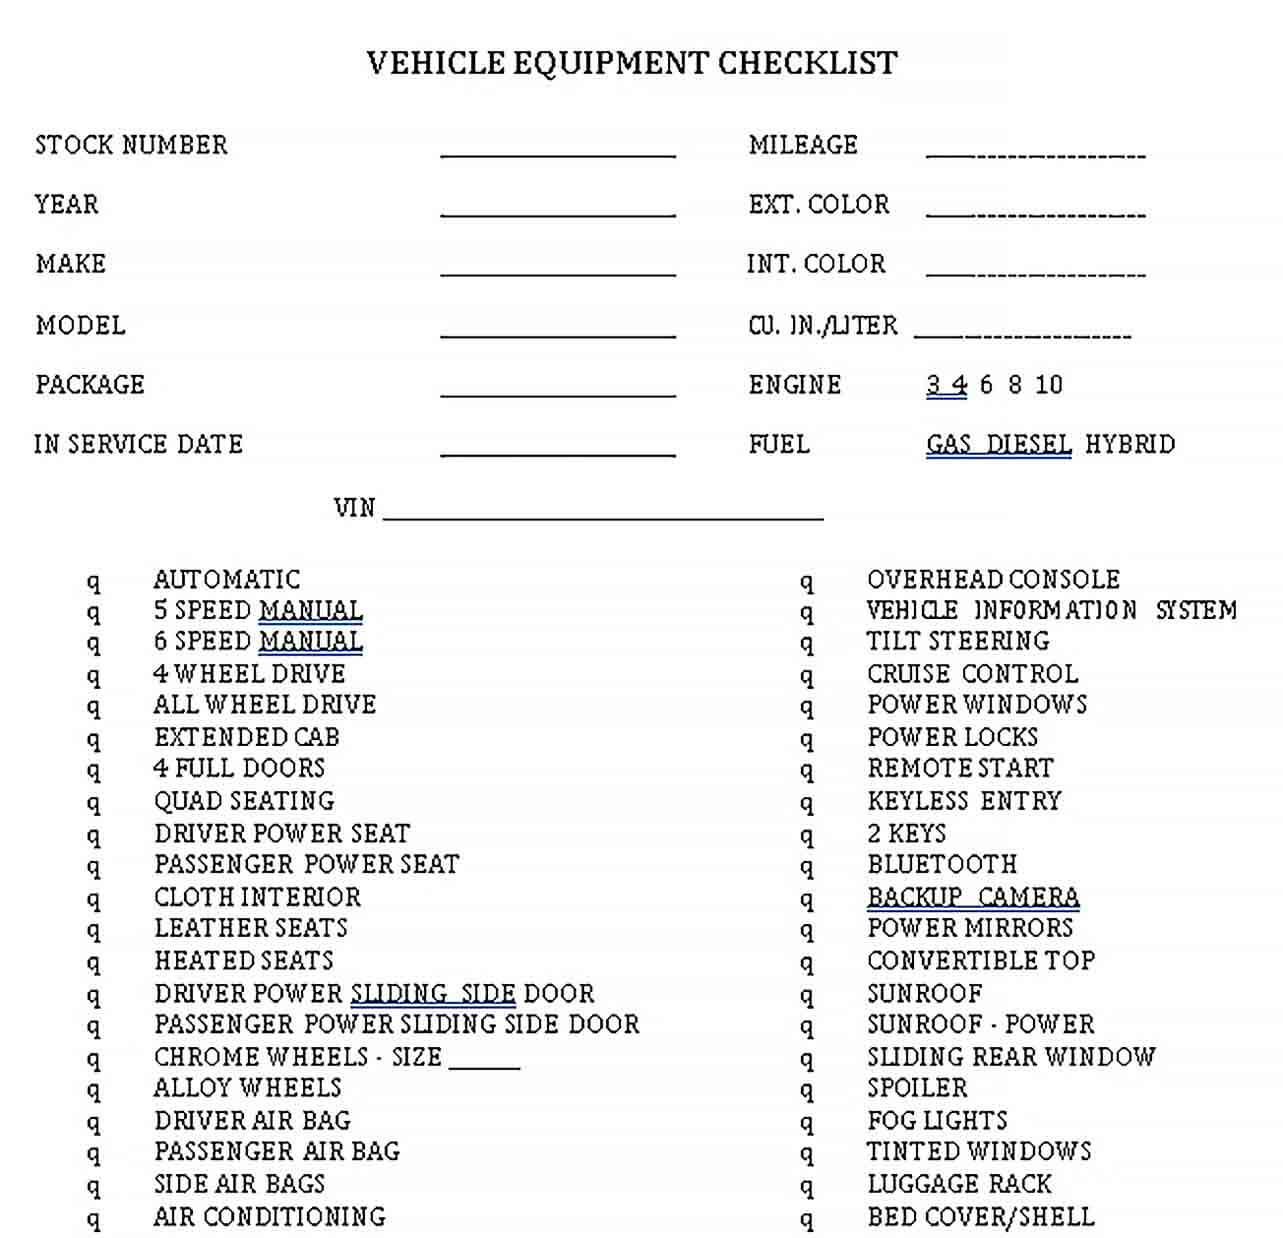 Sample Vehicle Equipment Checklist Sample